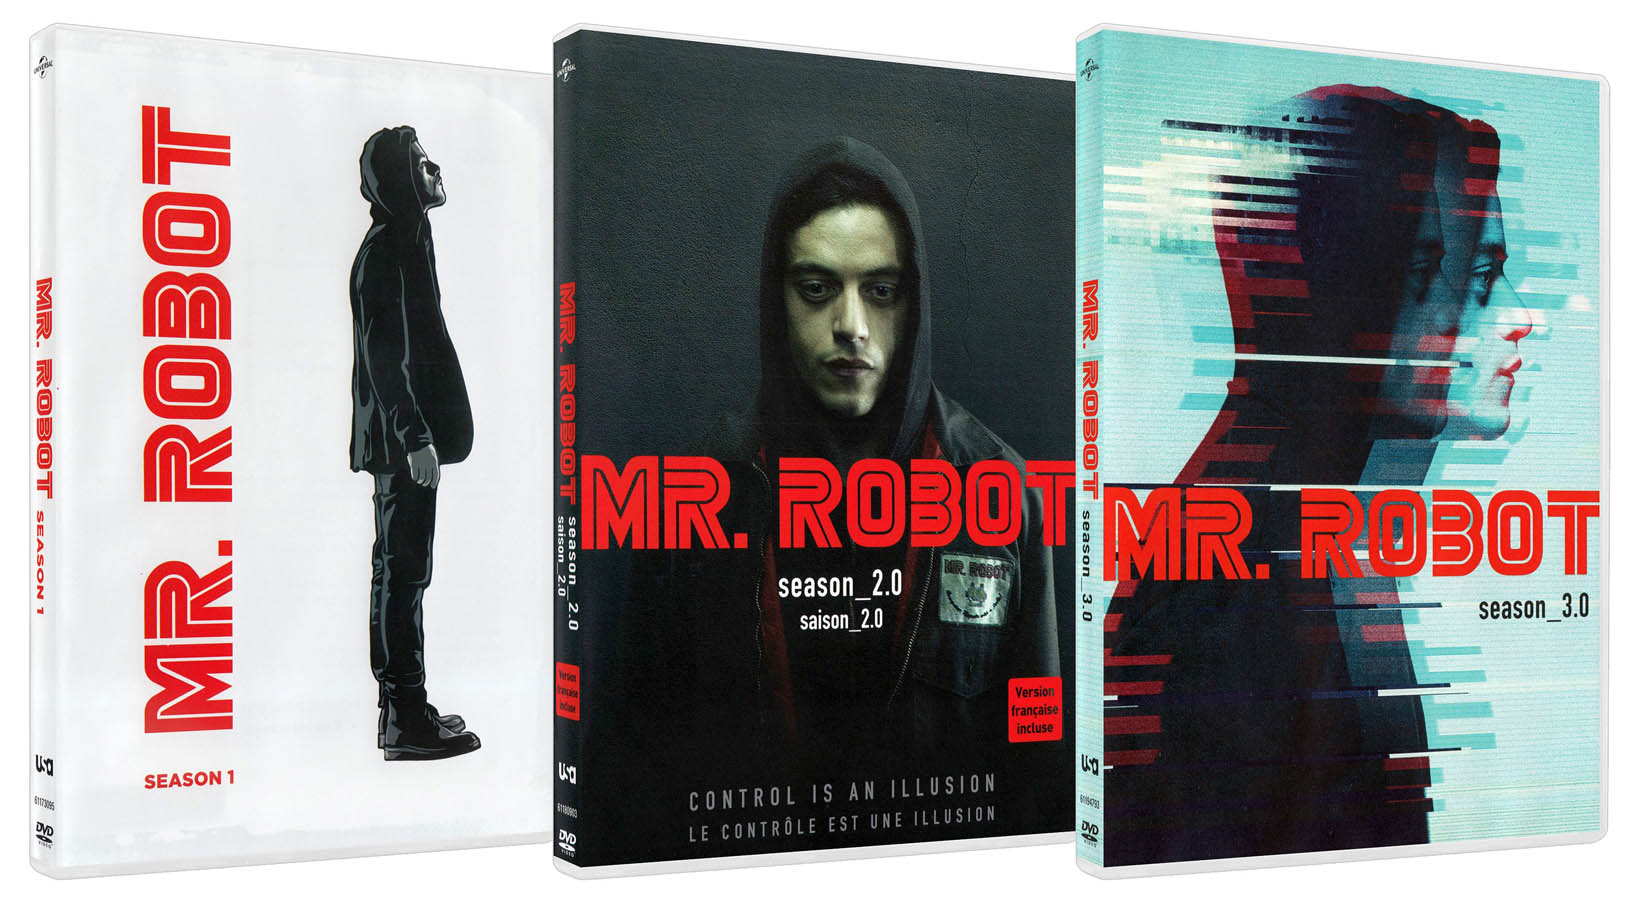 Mr. Robot (Season 1 - 3) (Boxset) New DVD 624262216049 |